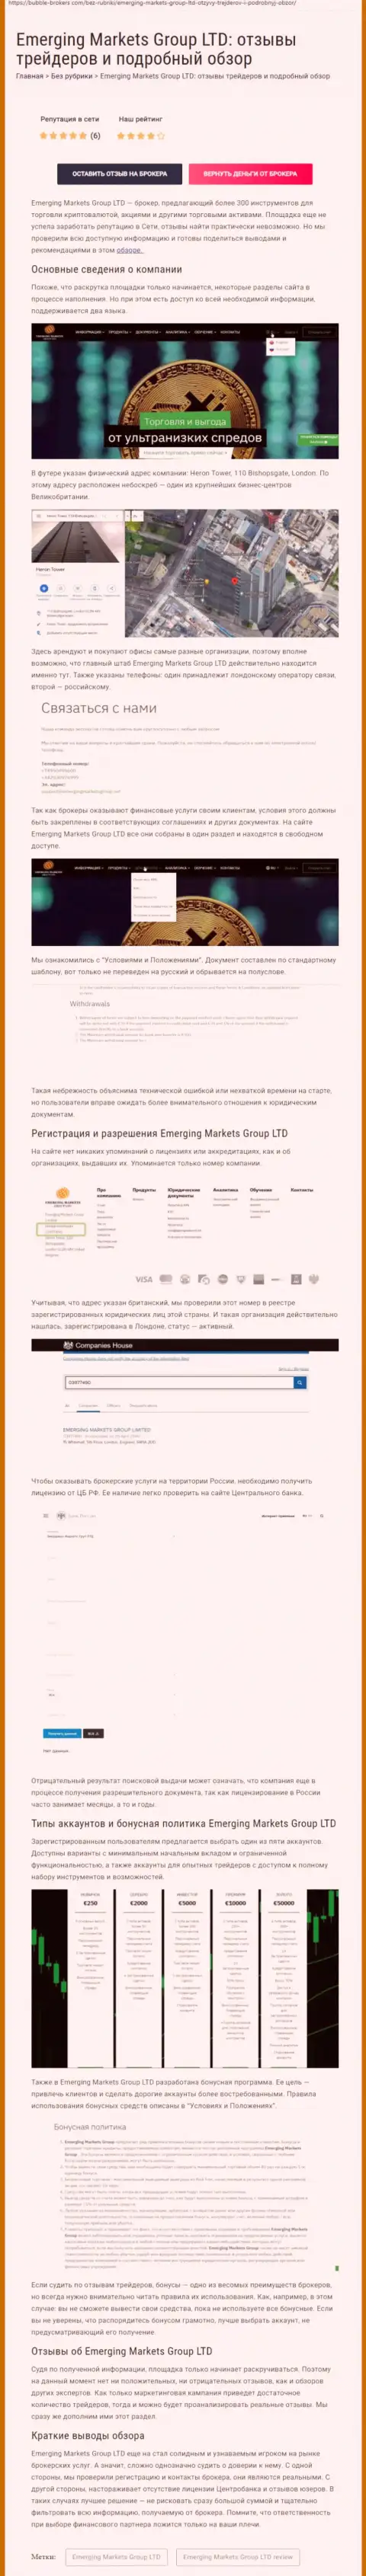 Сайт bubble brokers com опубликовал обзор брокера Emerging Markets Group Ltd